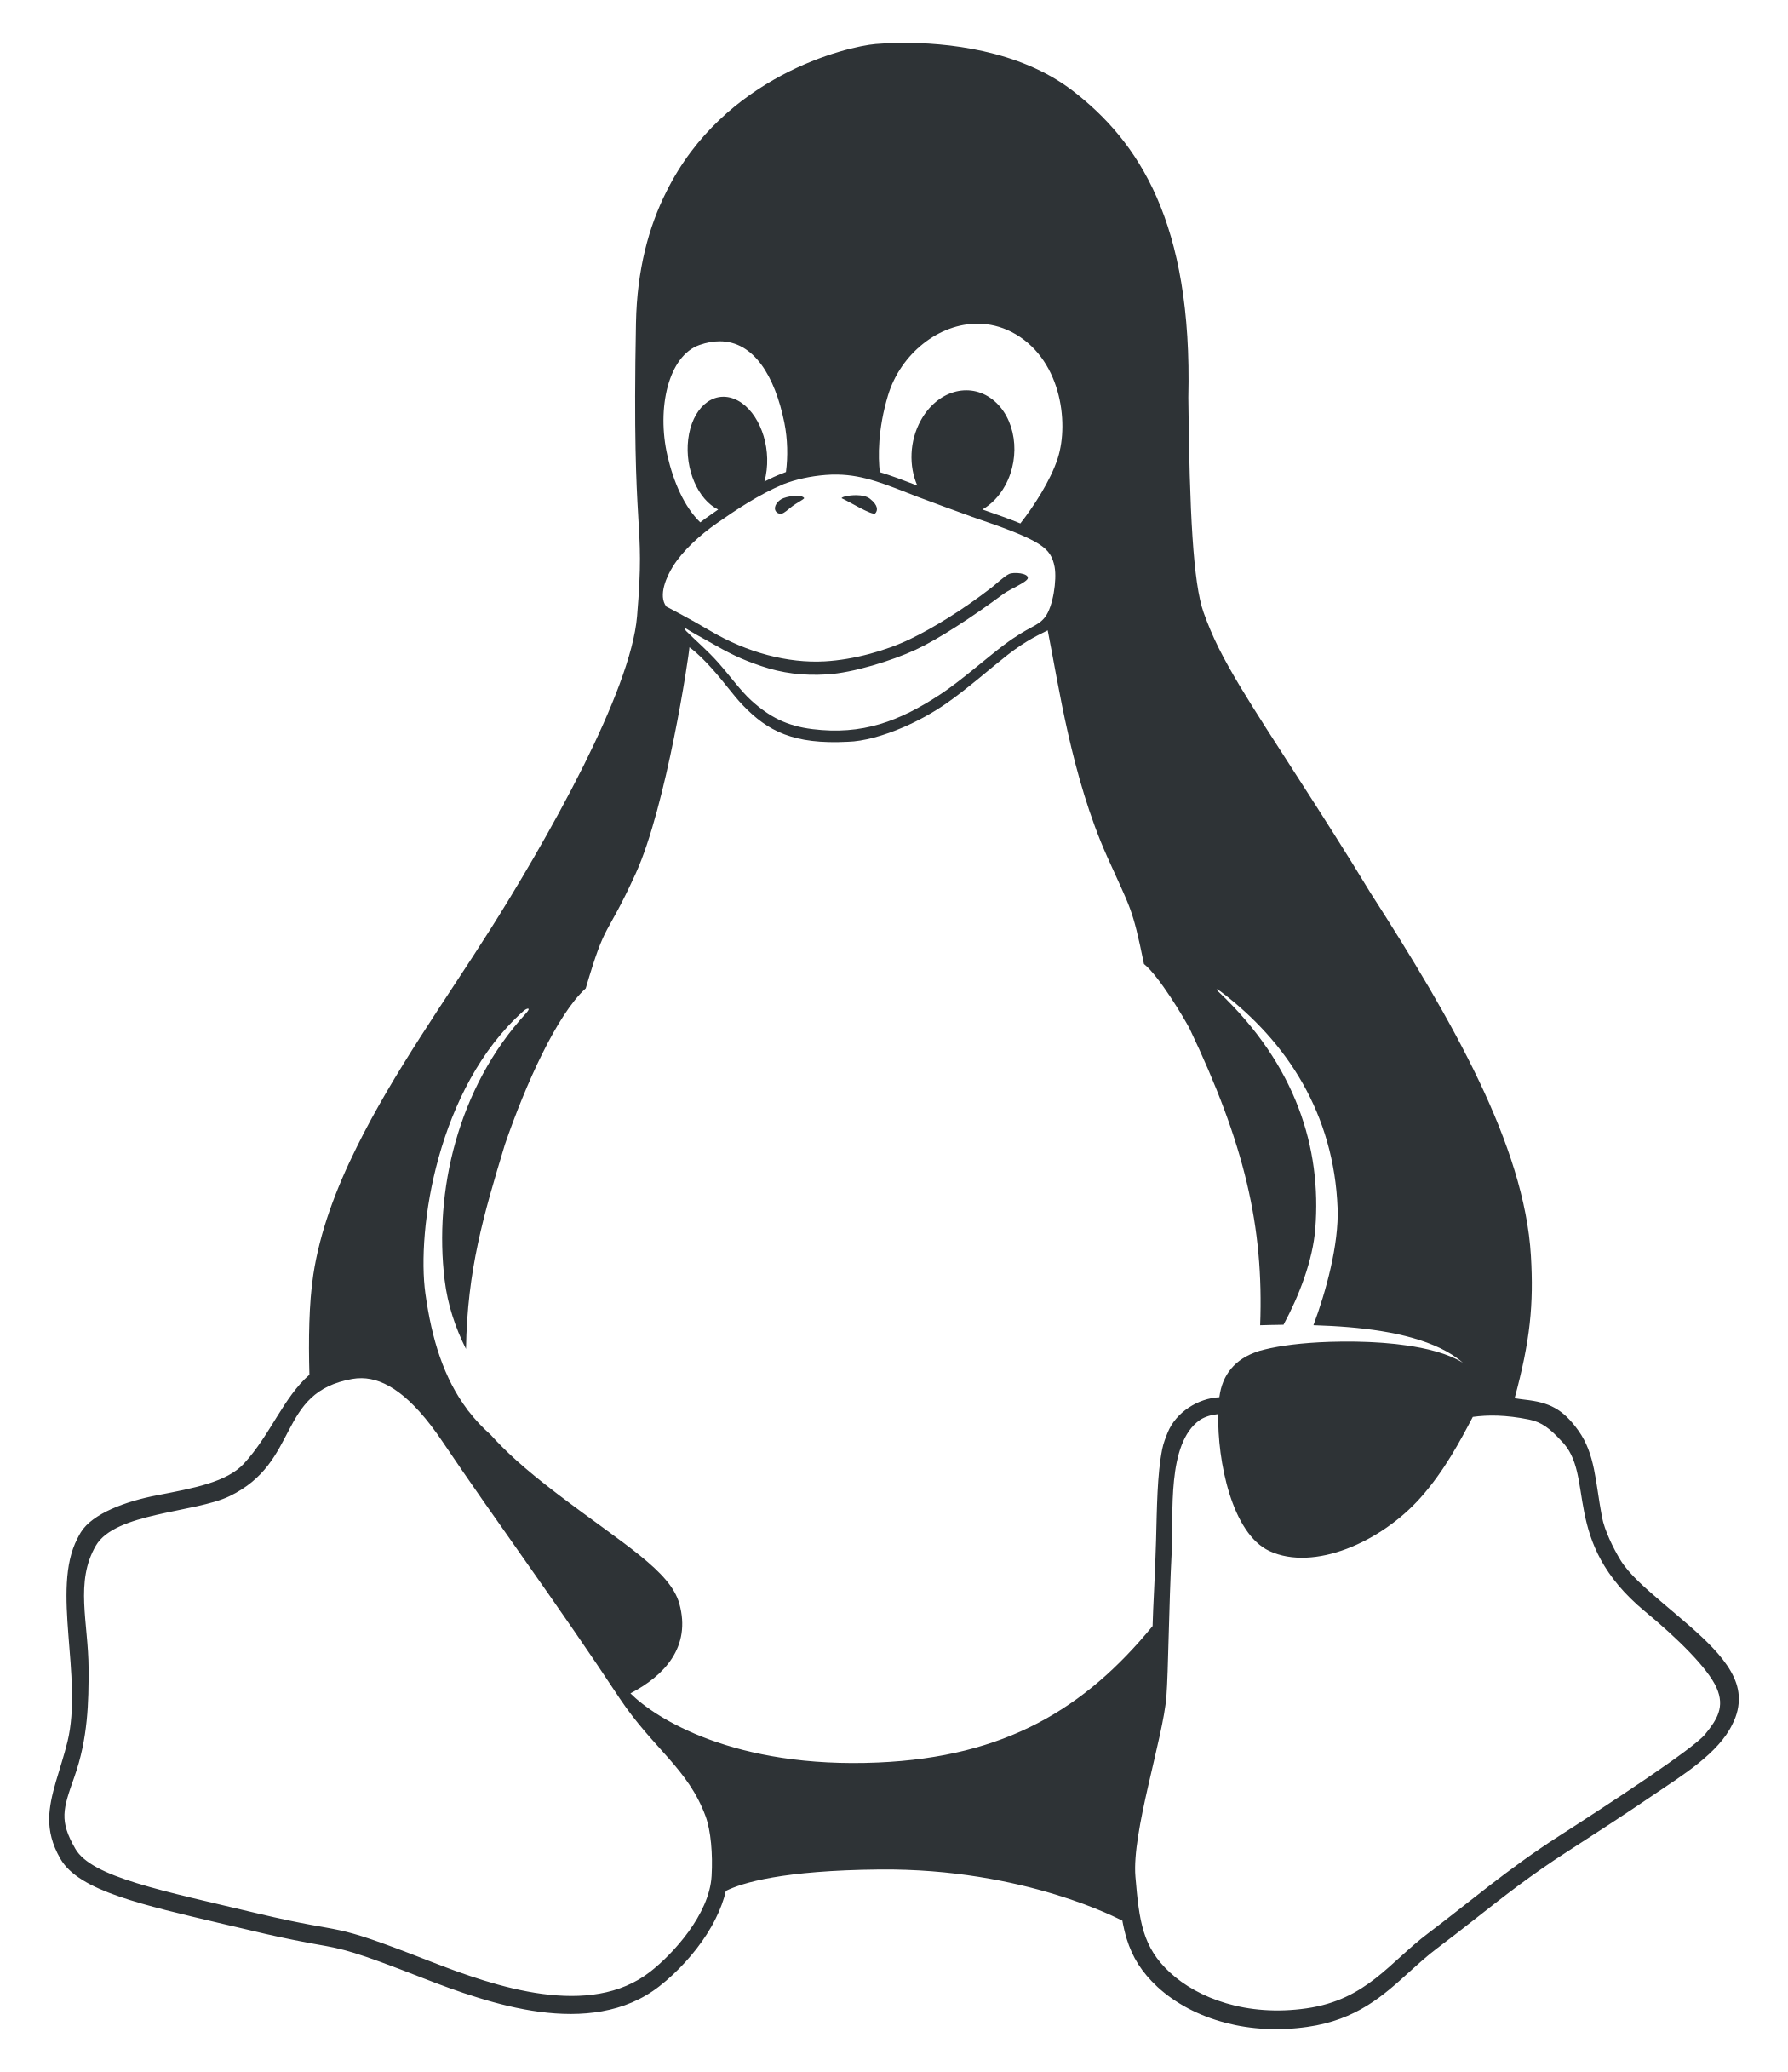 Tux Gnu Linux Penguin Free Transparent Image HD PNG Image